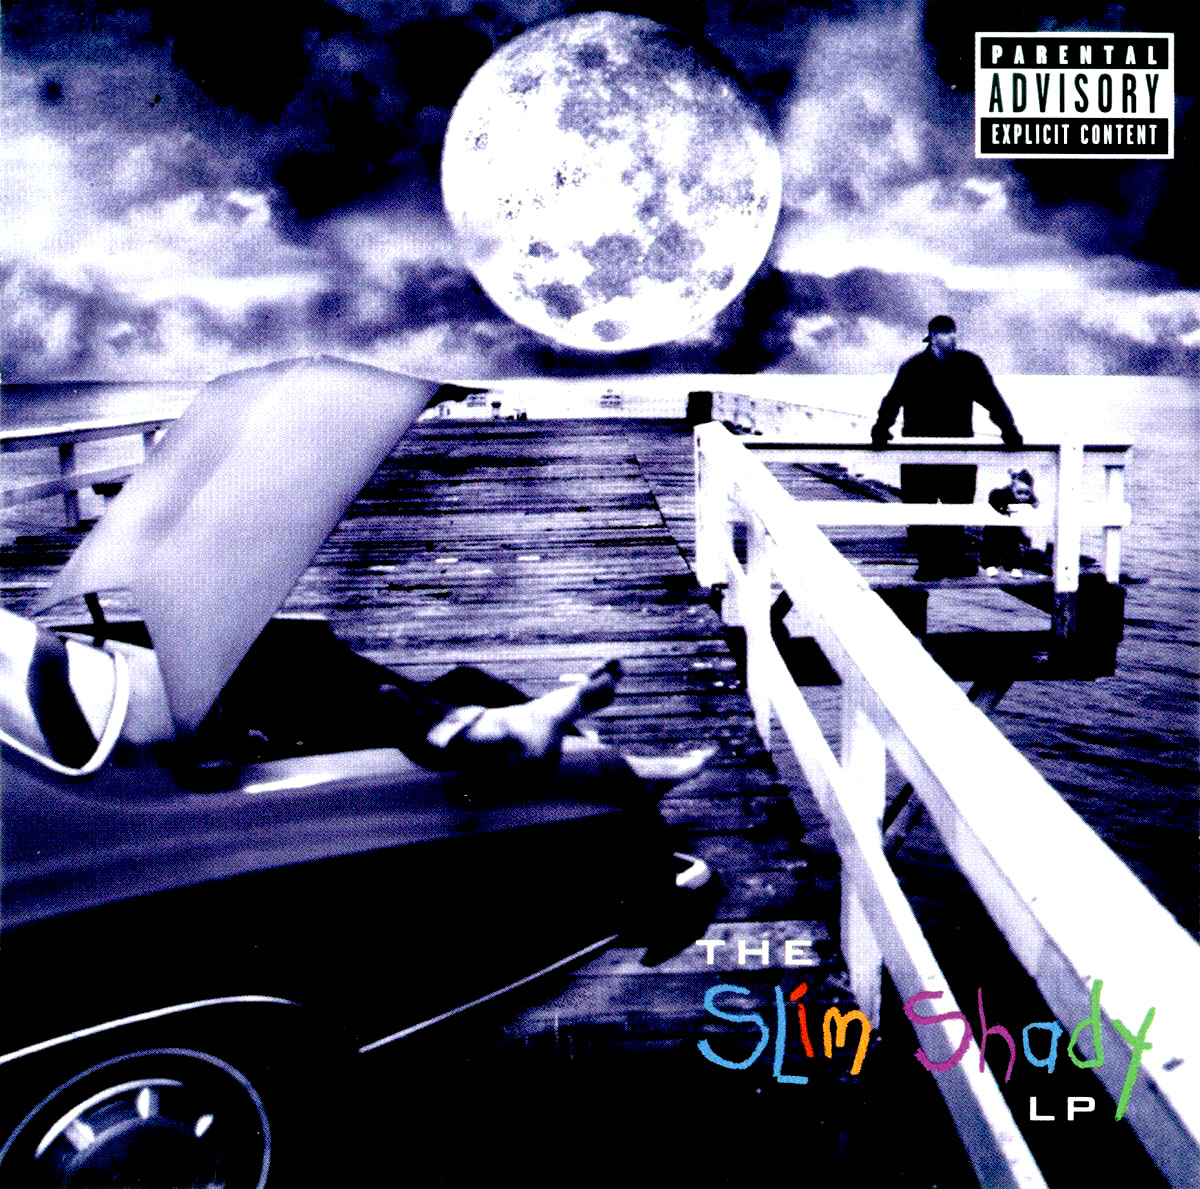 16 Years Ago Today Eminem Released His Second Studio Album - The Slim Shady LP!